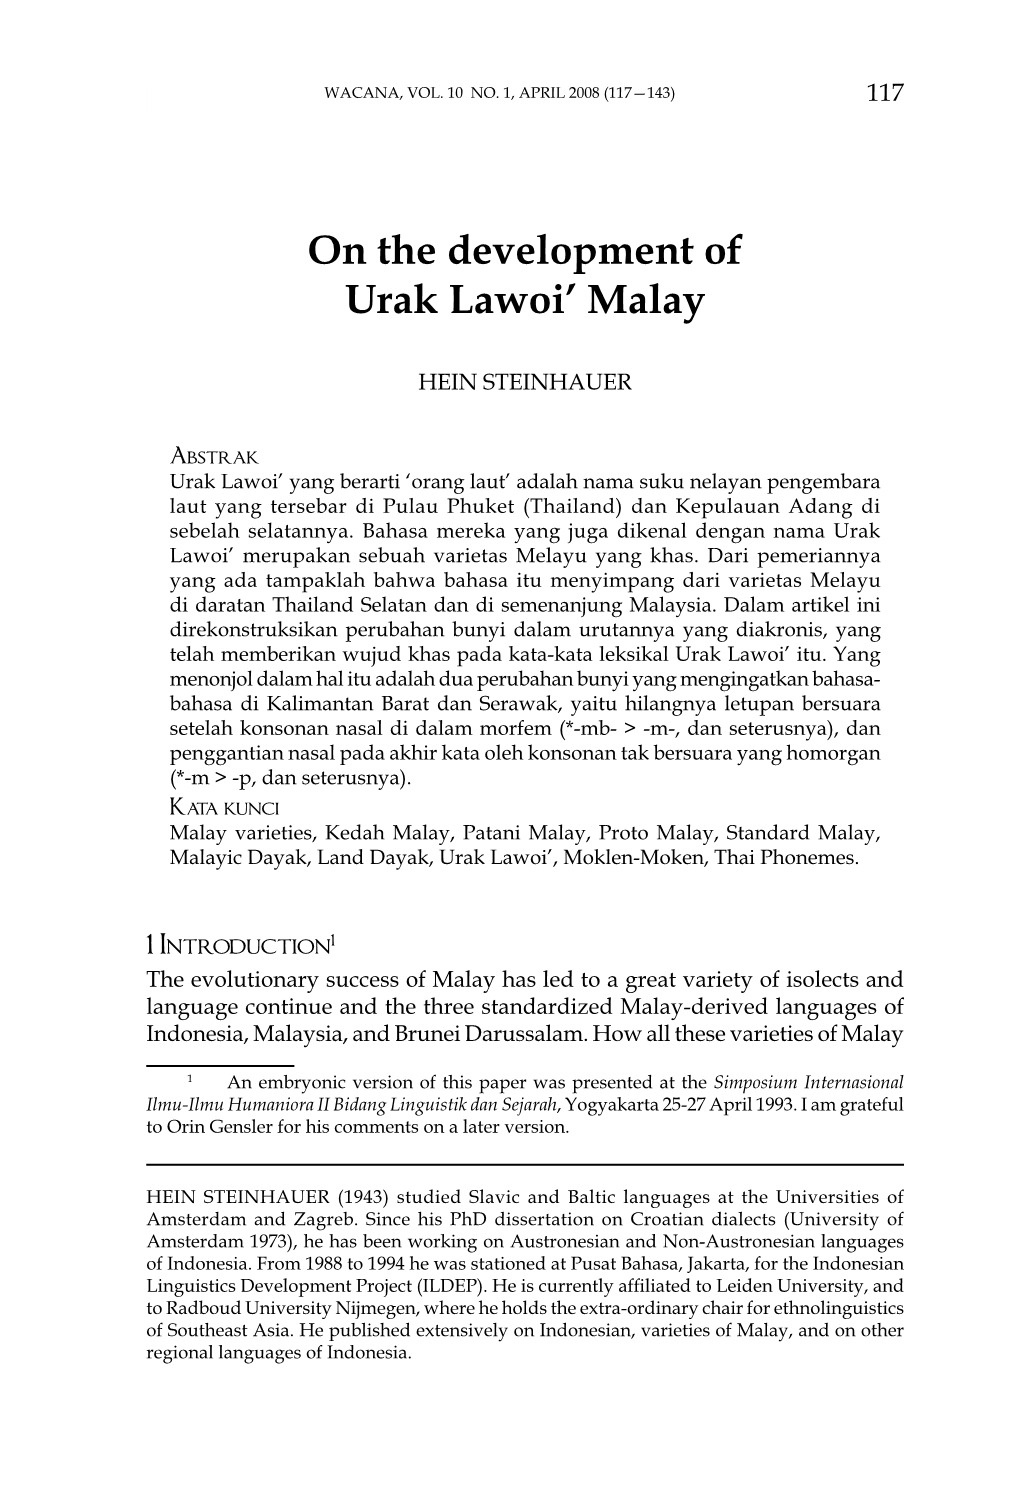 On the Development of Urak Lawoi' Malay